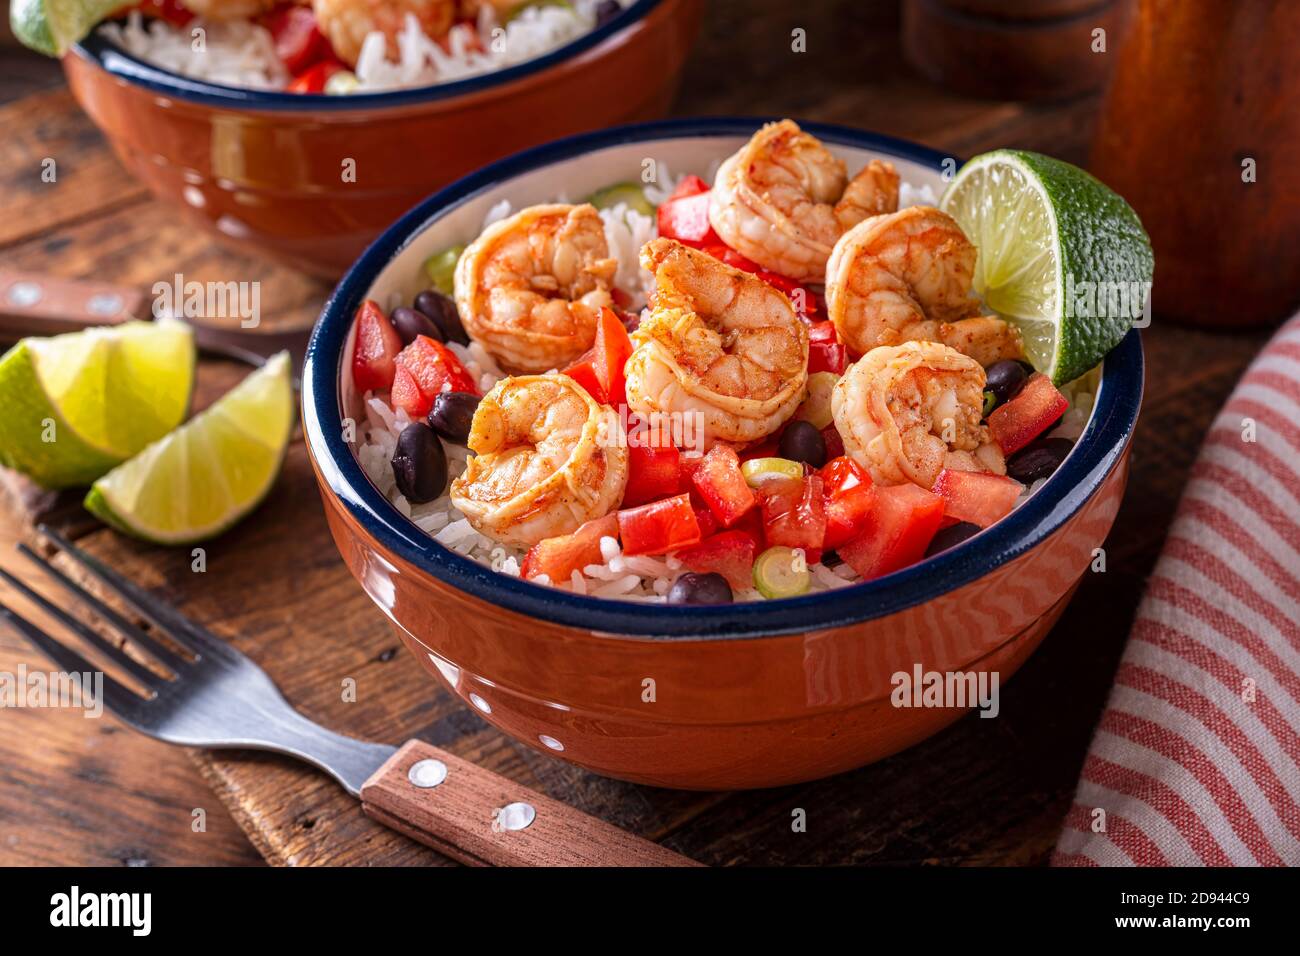 A delicious chili lime shrimp bowl with tomato, cilantro, black beans and rice. Stock Photo